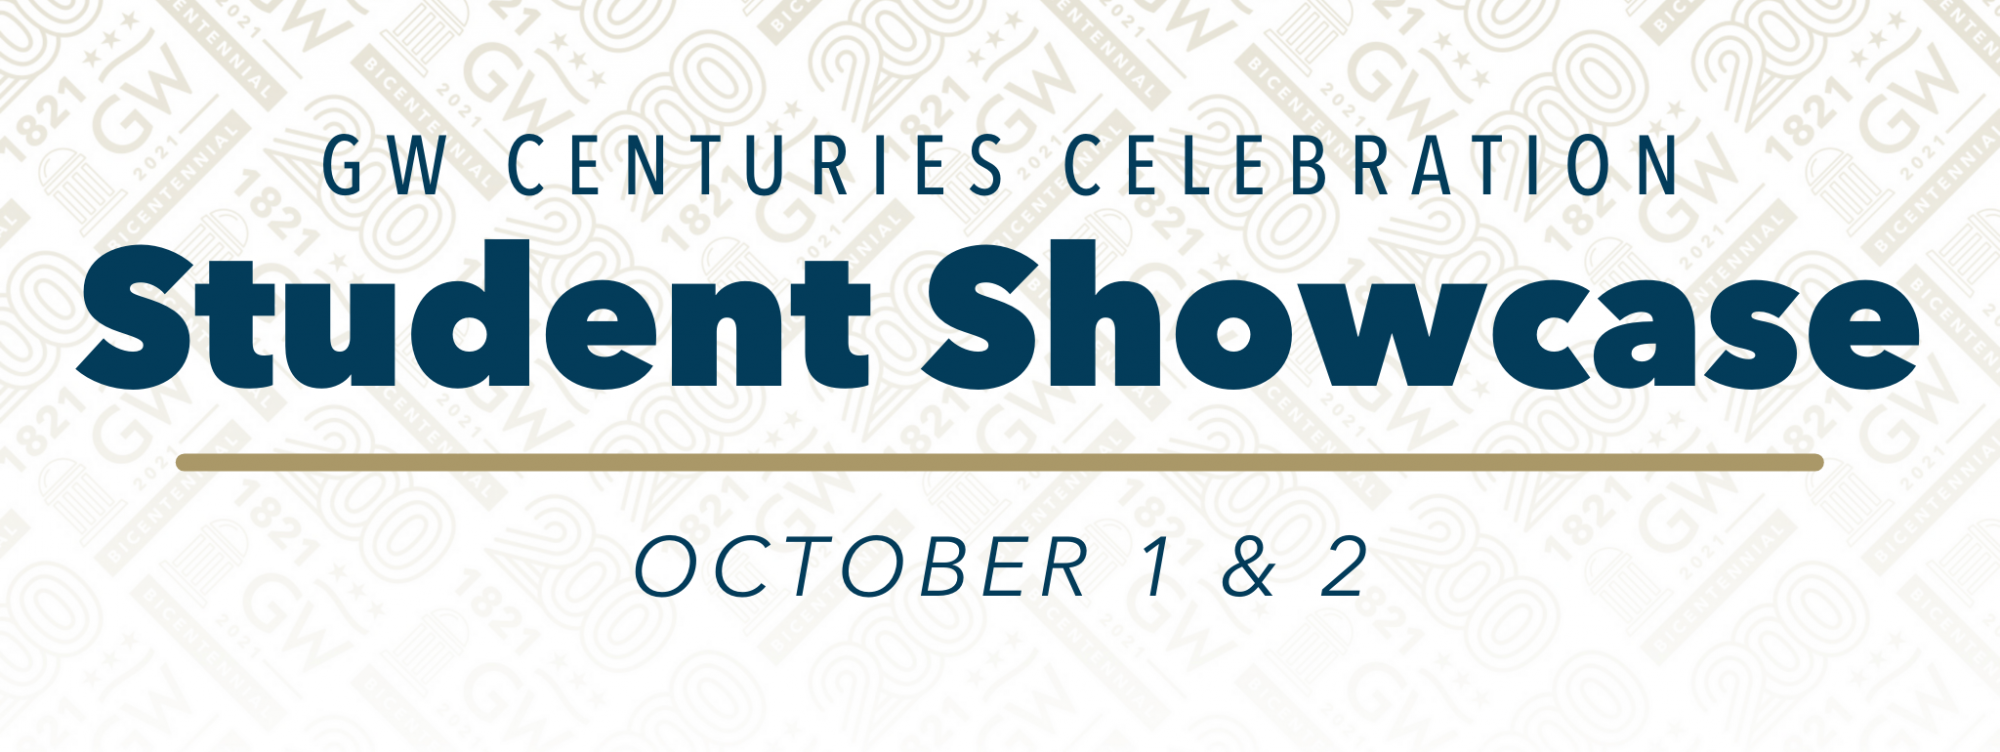 GW Centuries Celebration Student Showcase, October 1 & 2